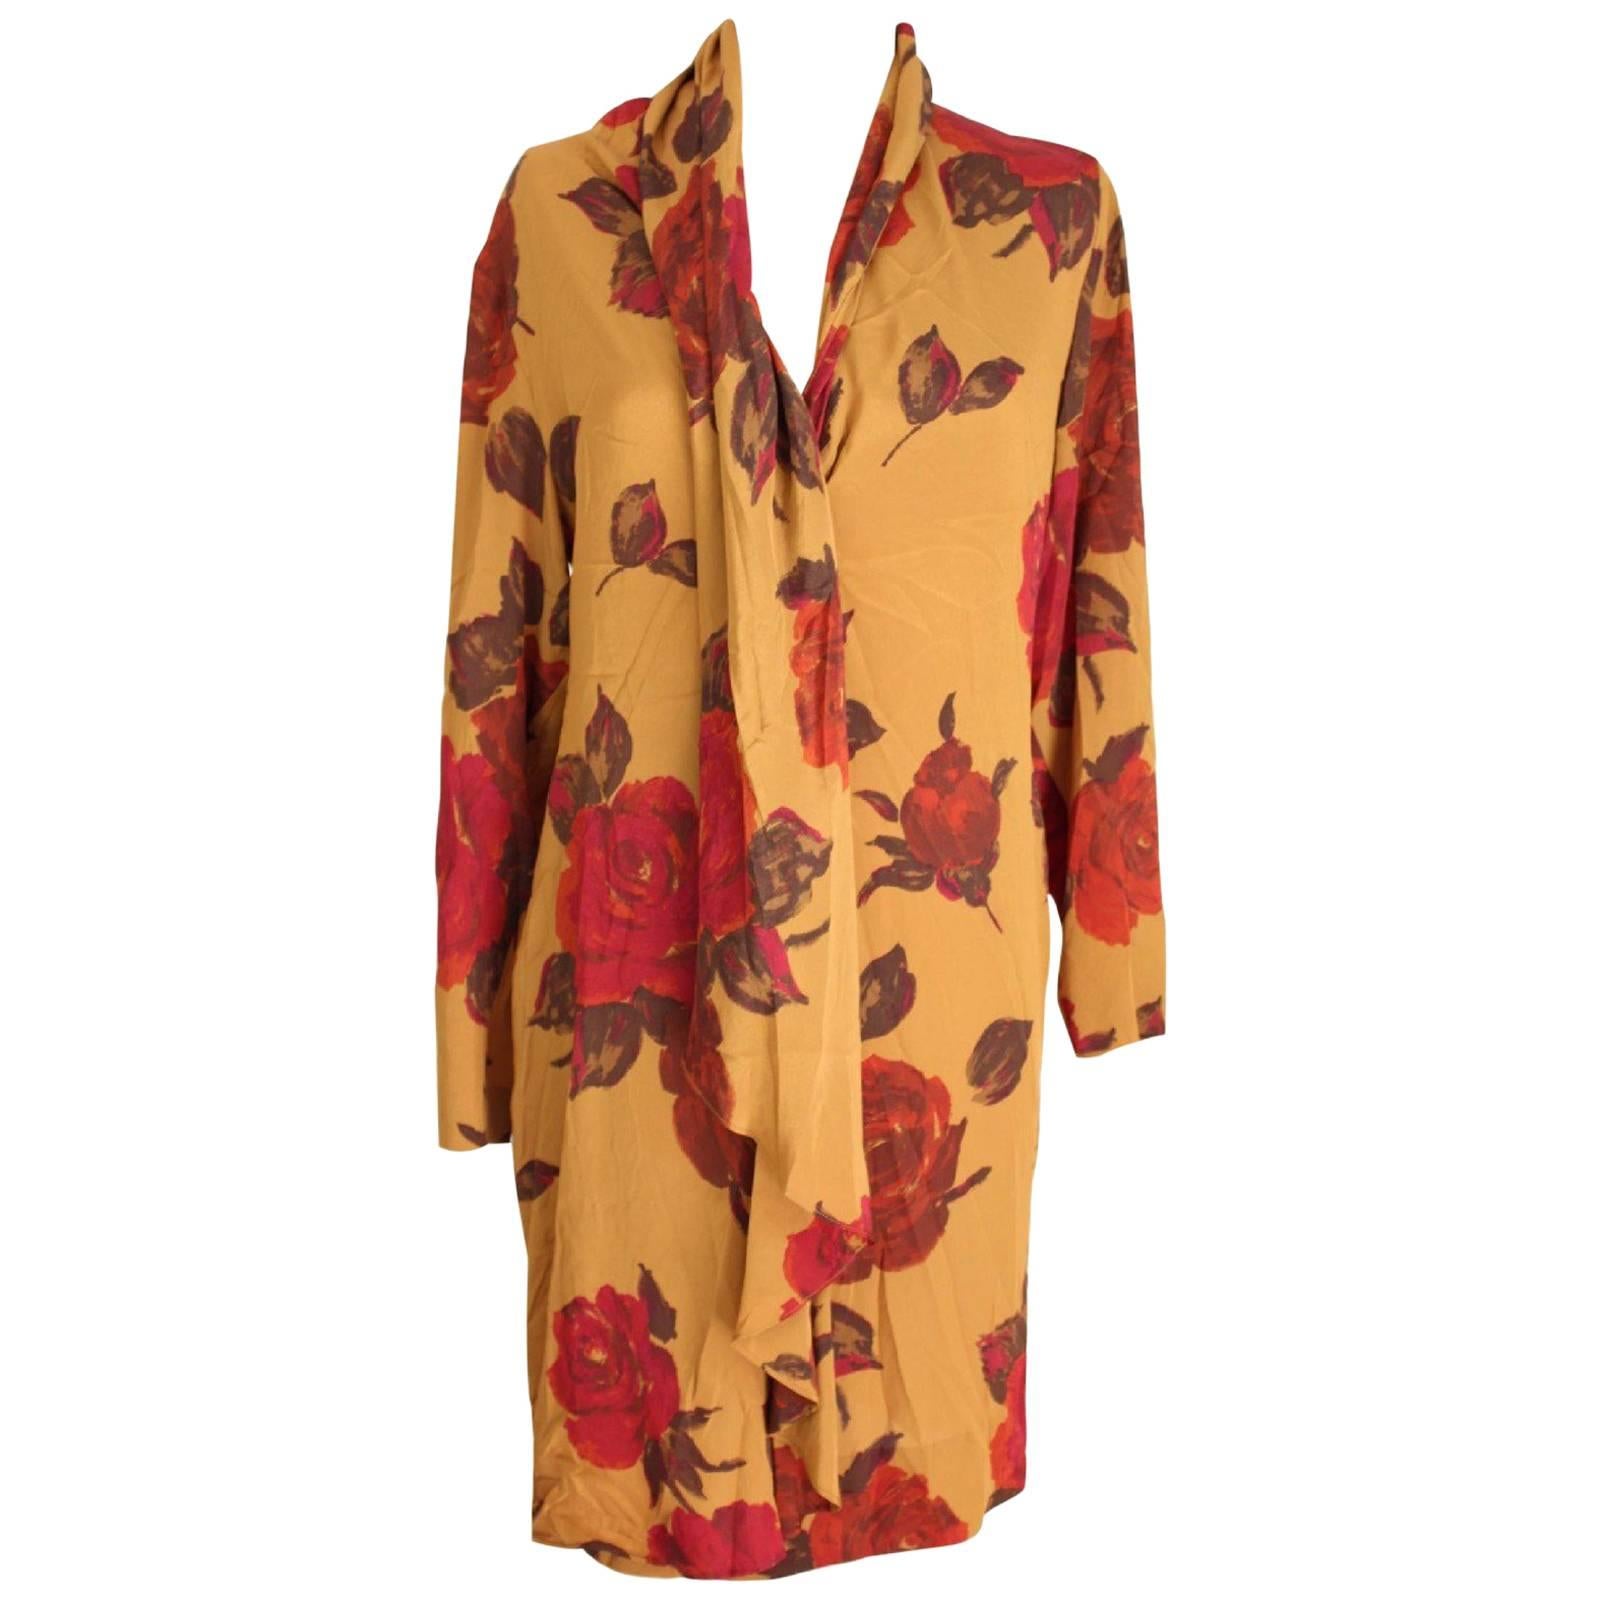 Laura Biagiotti Risposte orange brown silk floral dress 1980s size 42 it vintage For Sale